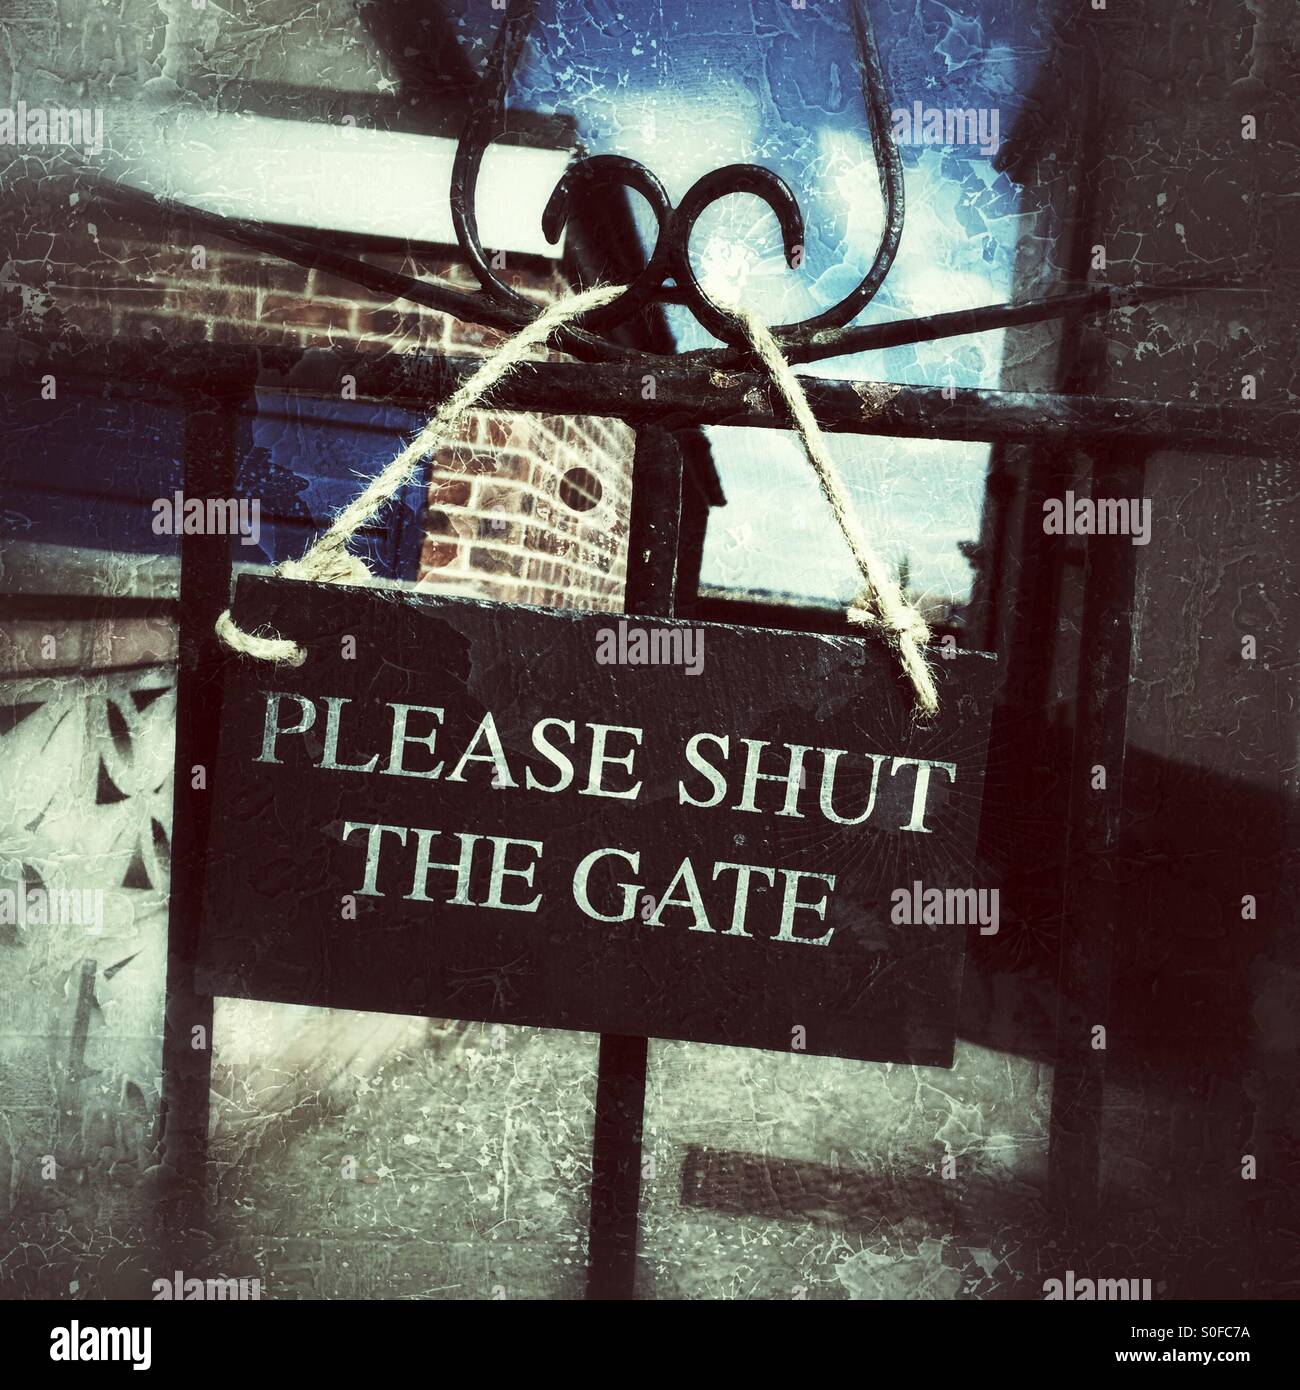 Please shut the gate sign Stock Photo